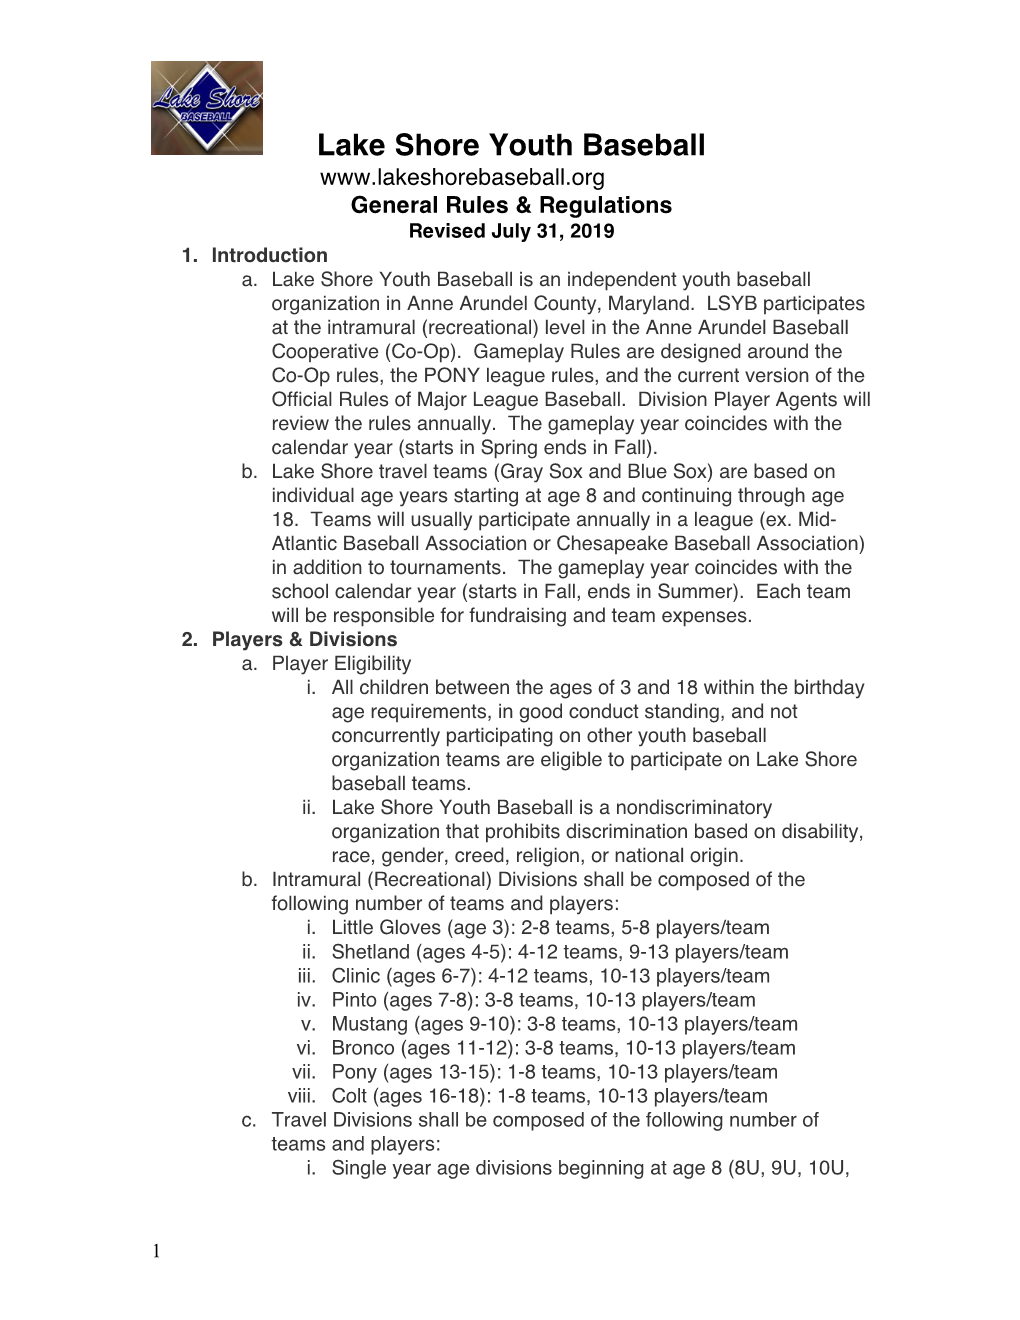 Lake Shore Youth Baseball General Rules & Regulations Revised July 31, 2019 1